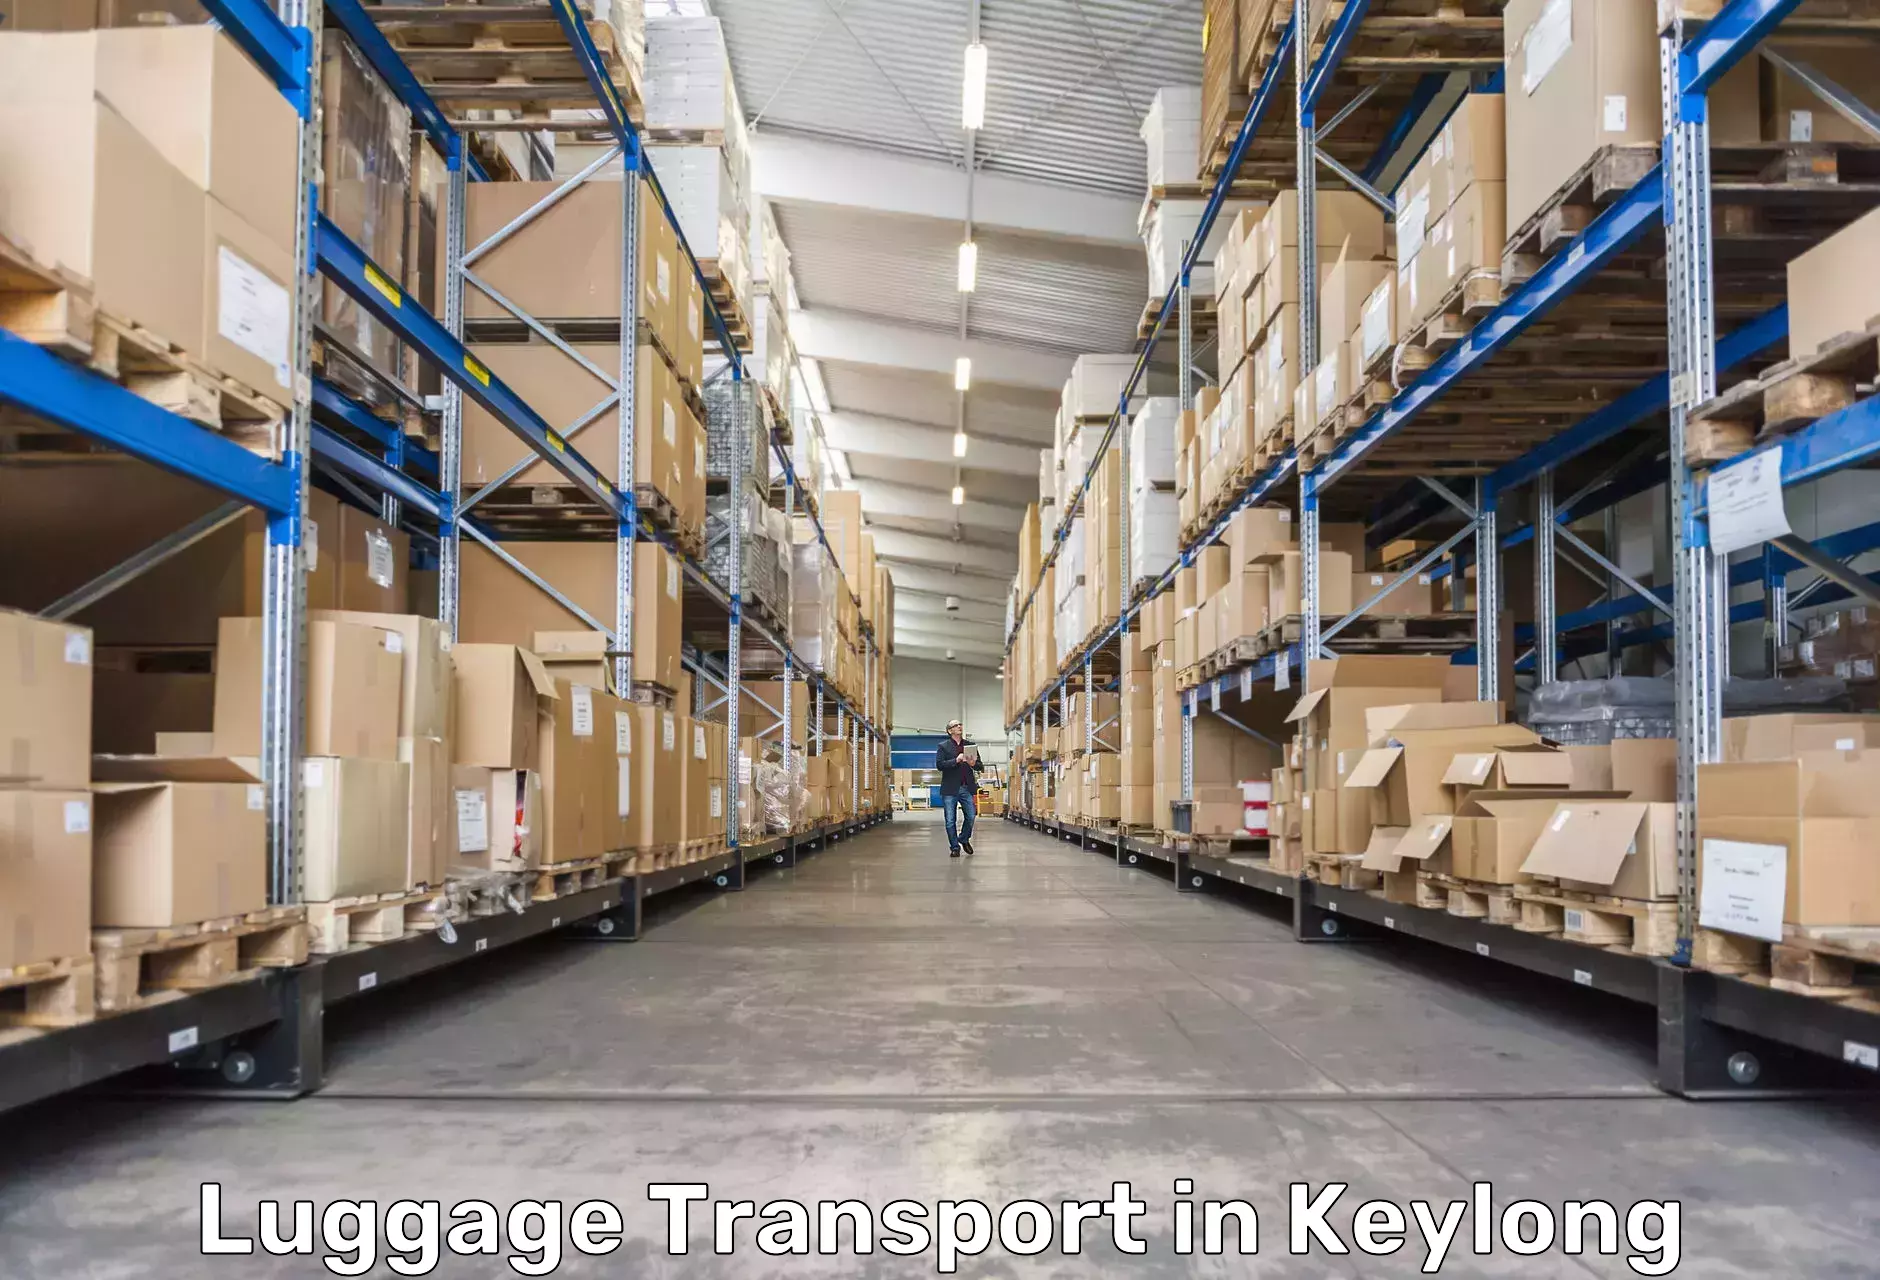 Baggage transport innovation in Keylong